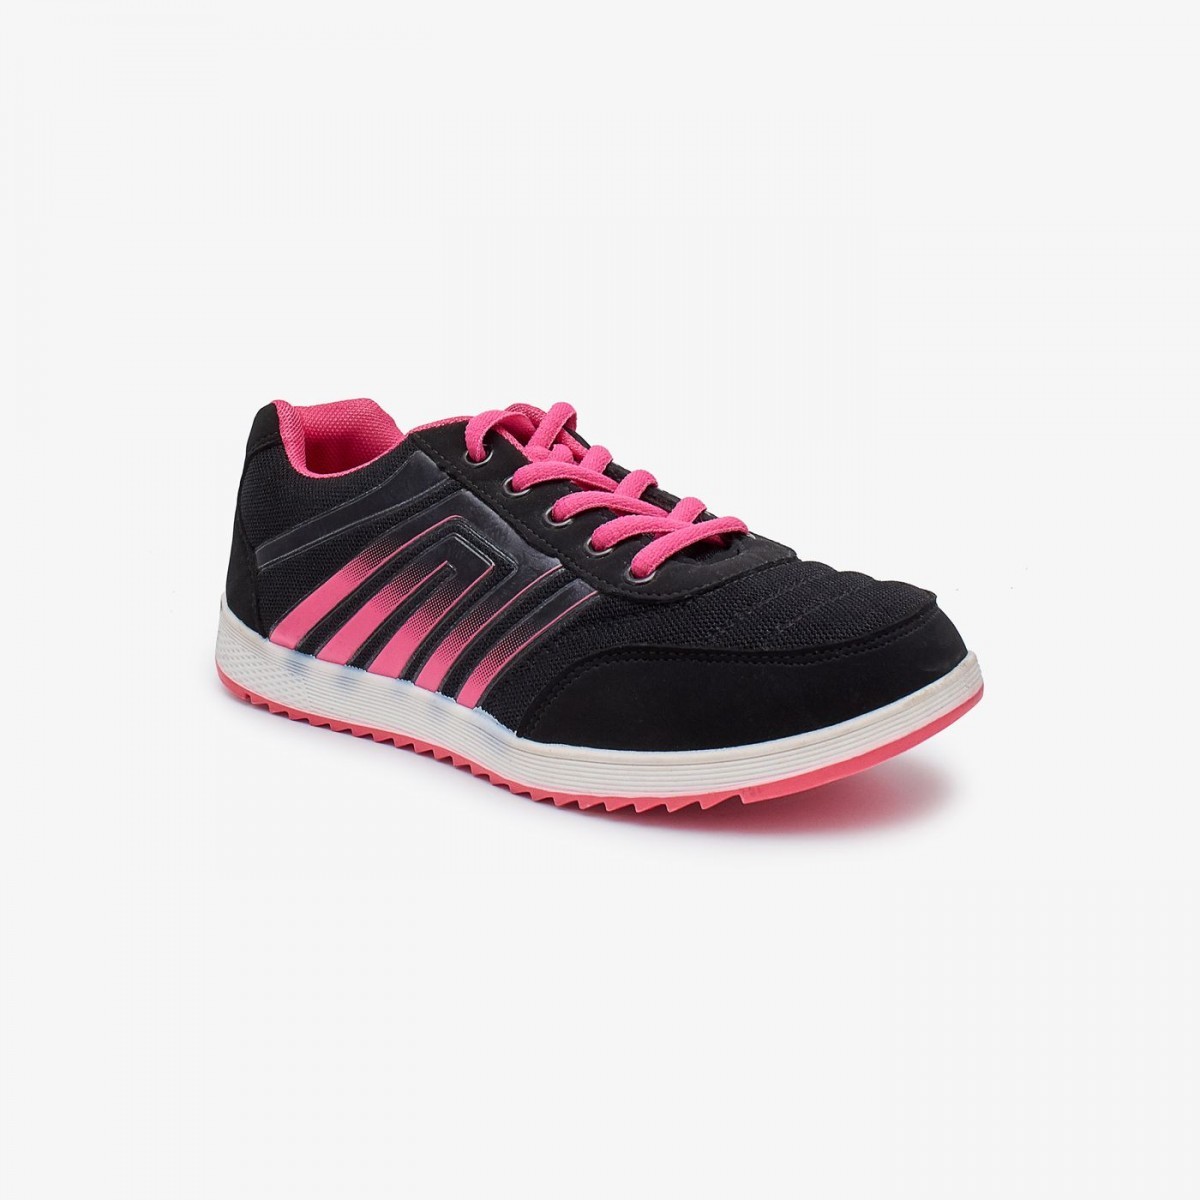 /2019/08/liza-women-running-shoes-lz-zs-0003-blk-fsh-image1.jpeg